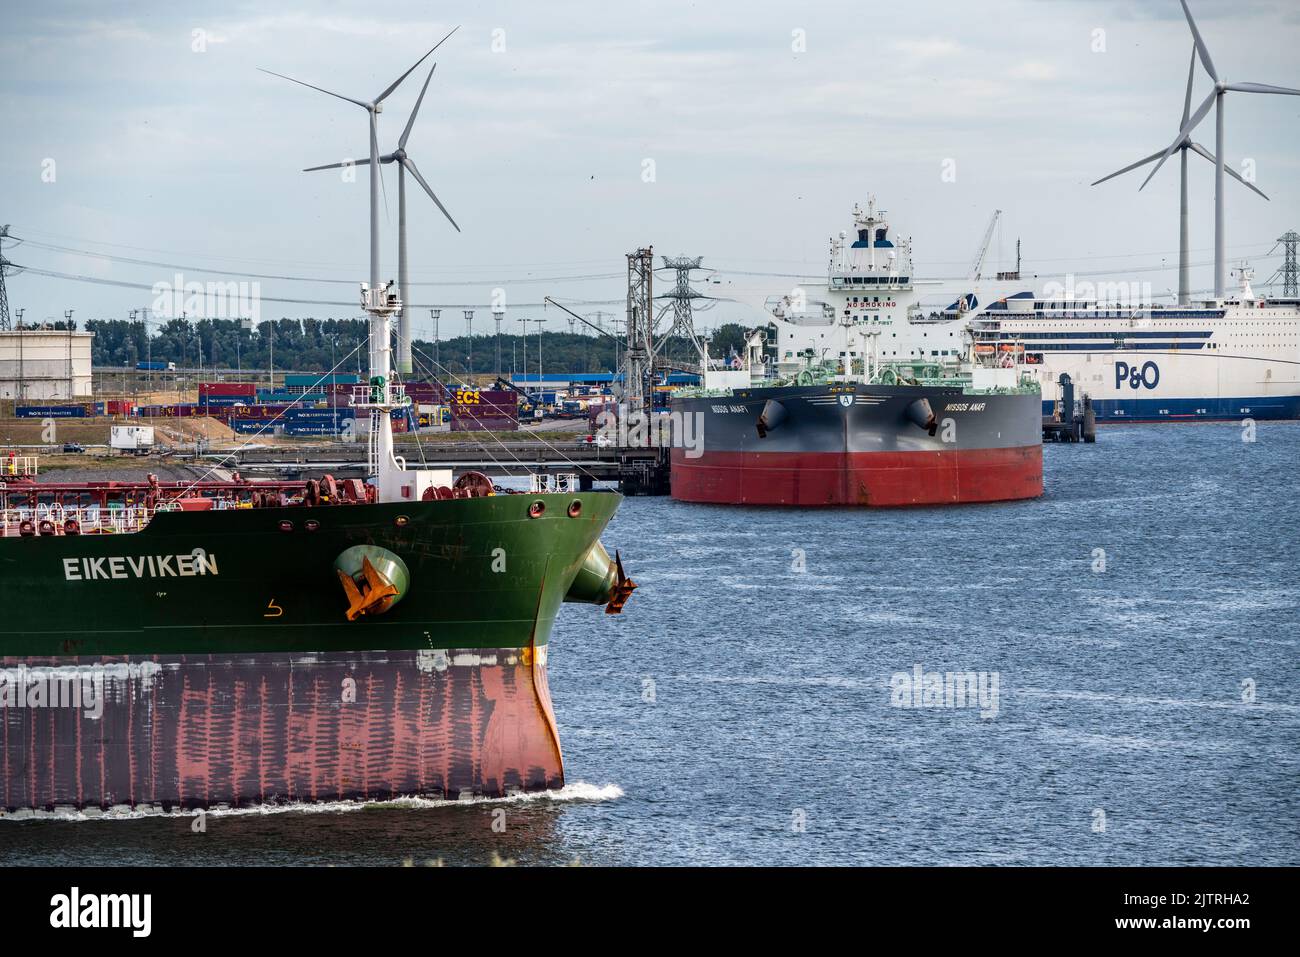 Petroleumhaven, S nave petrolifera norvegese Eikevikenen, con partenza a vuoto, porto di Rotterdam, Paesi Bassi, Foto Stock